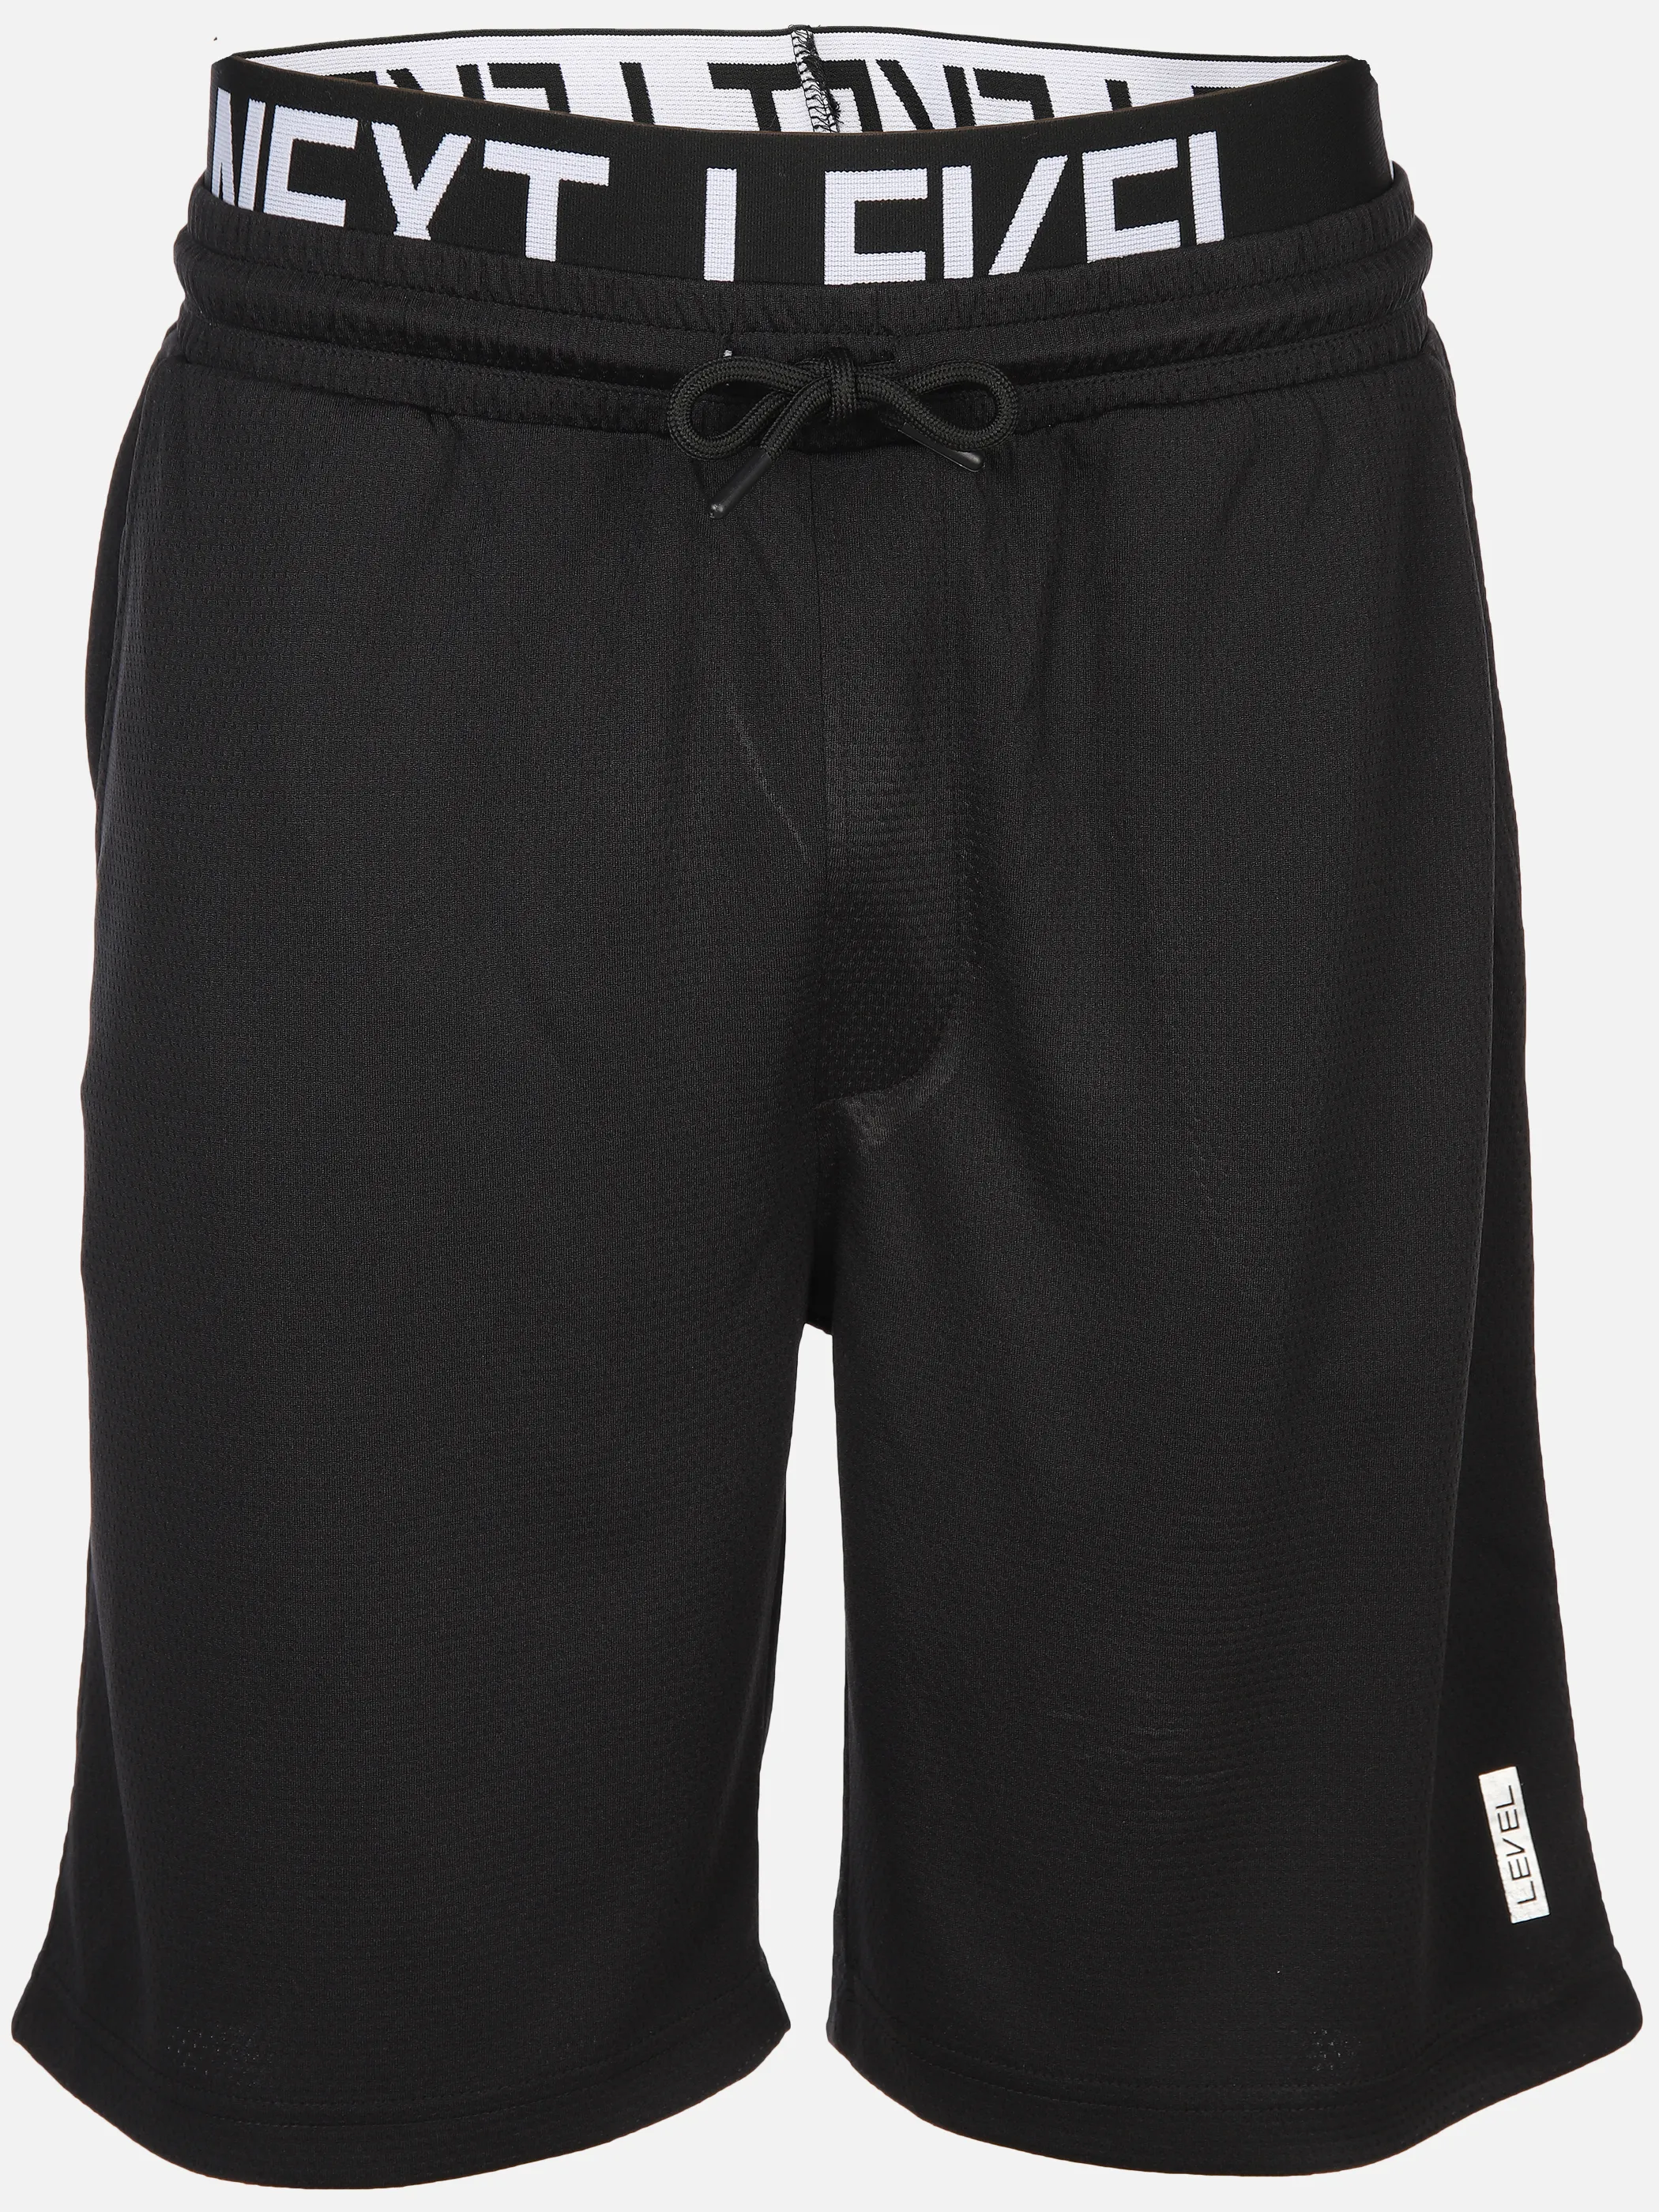 Grinario Sports He- Shorts Schwarz 890156 BLACK 1